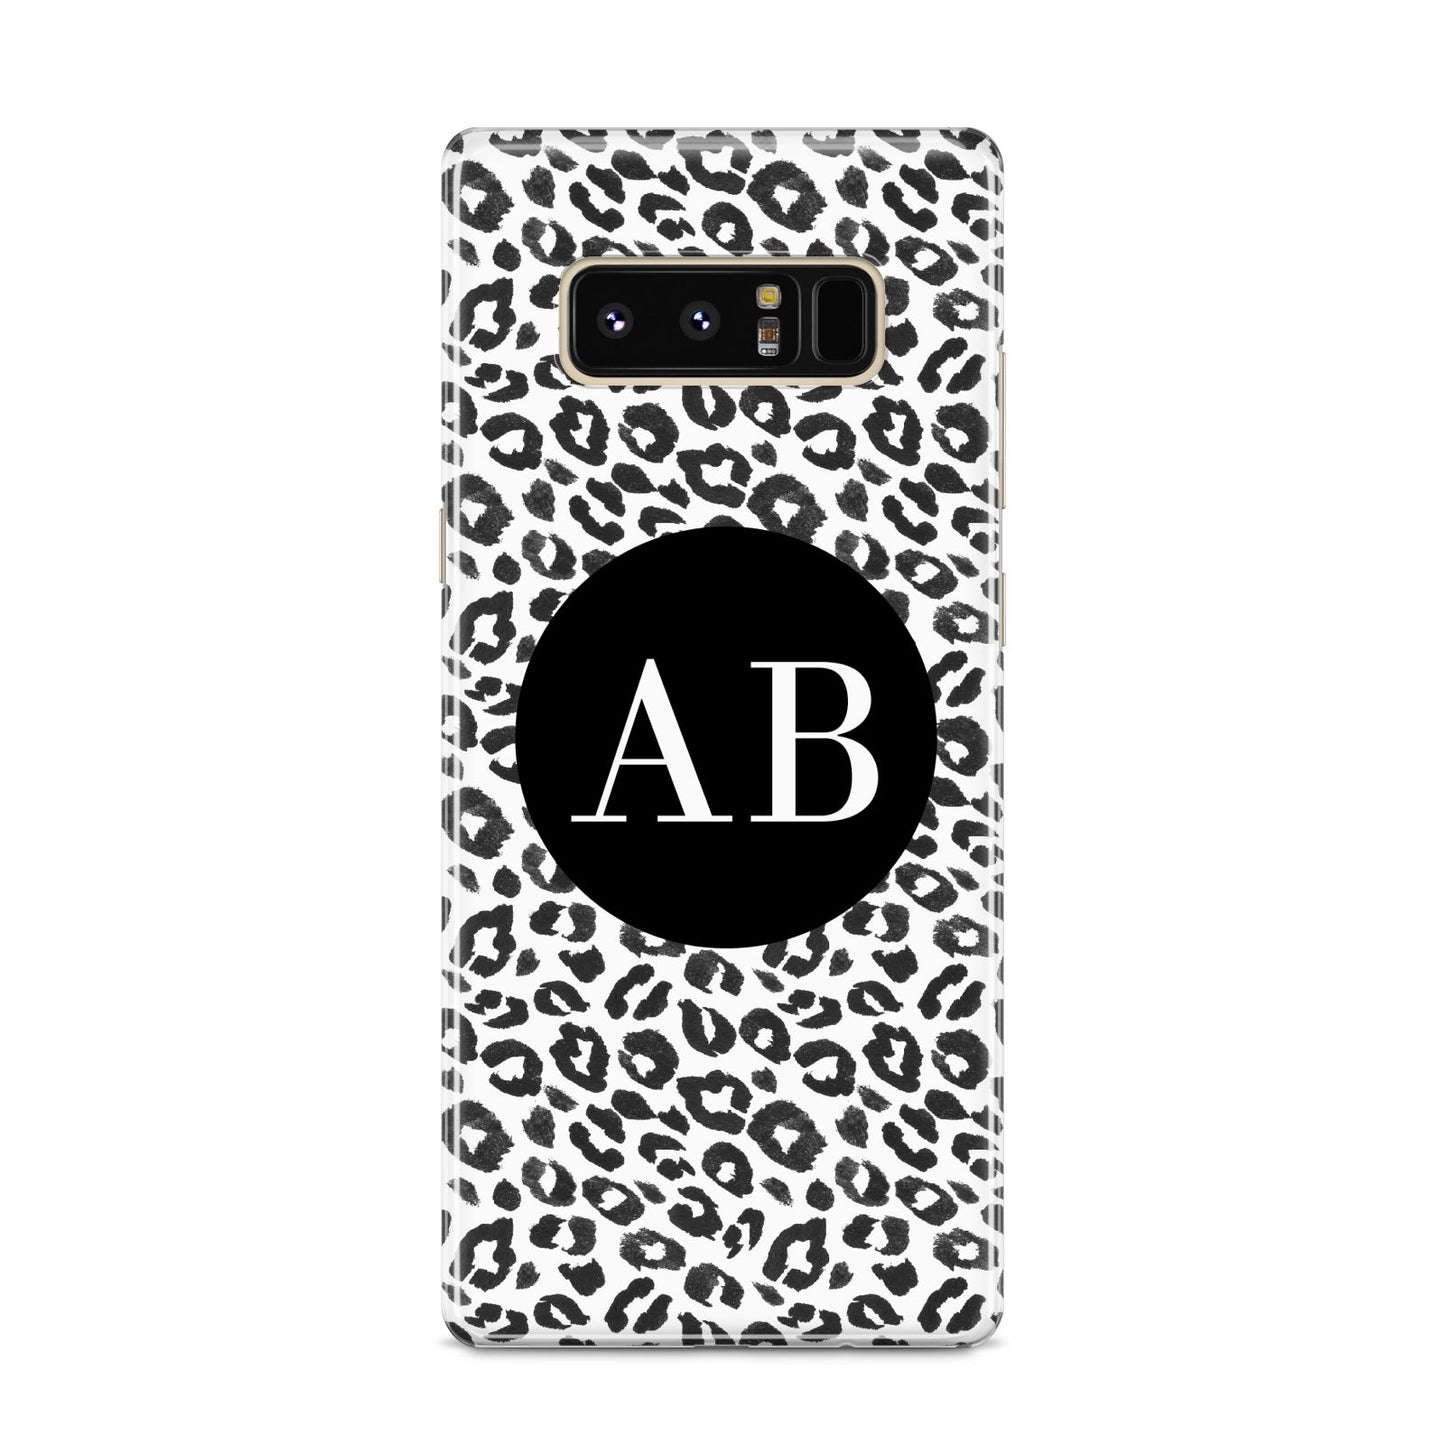 Leopard Print Black and White Samsung Galaxy S8 Case